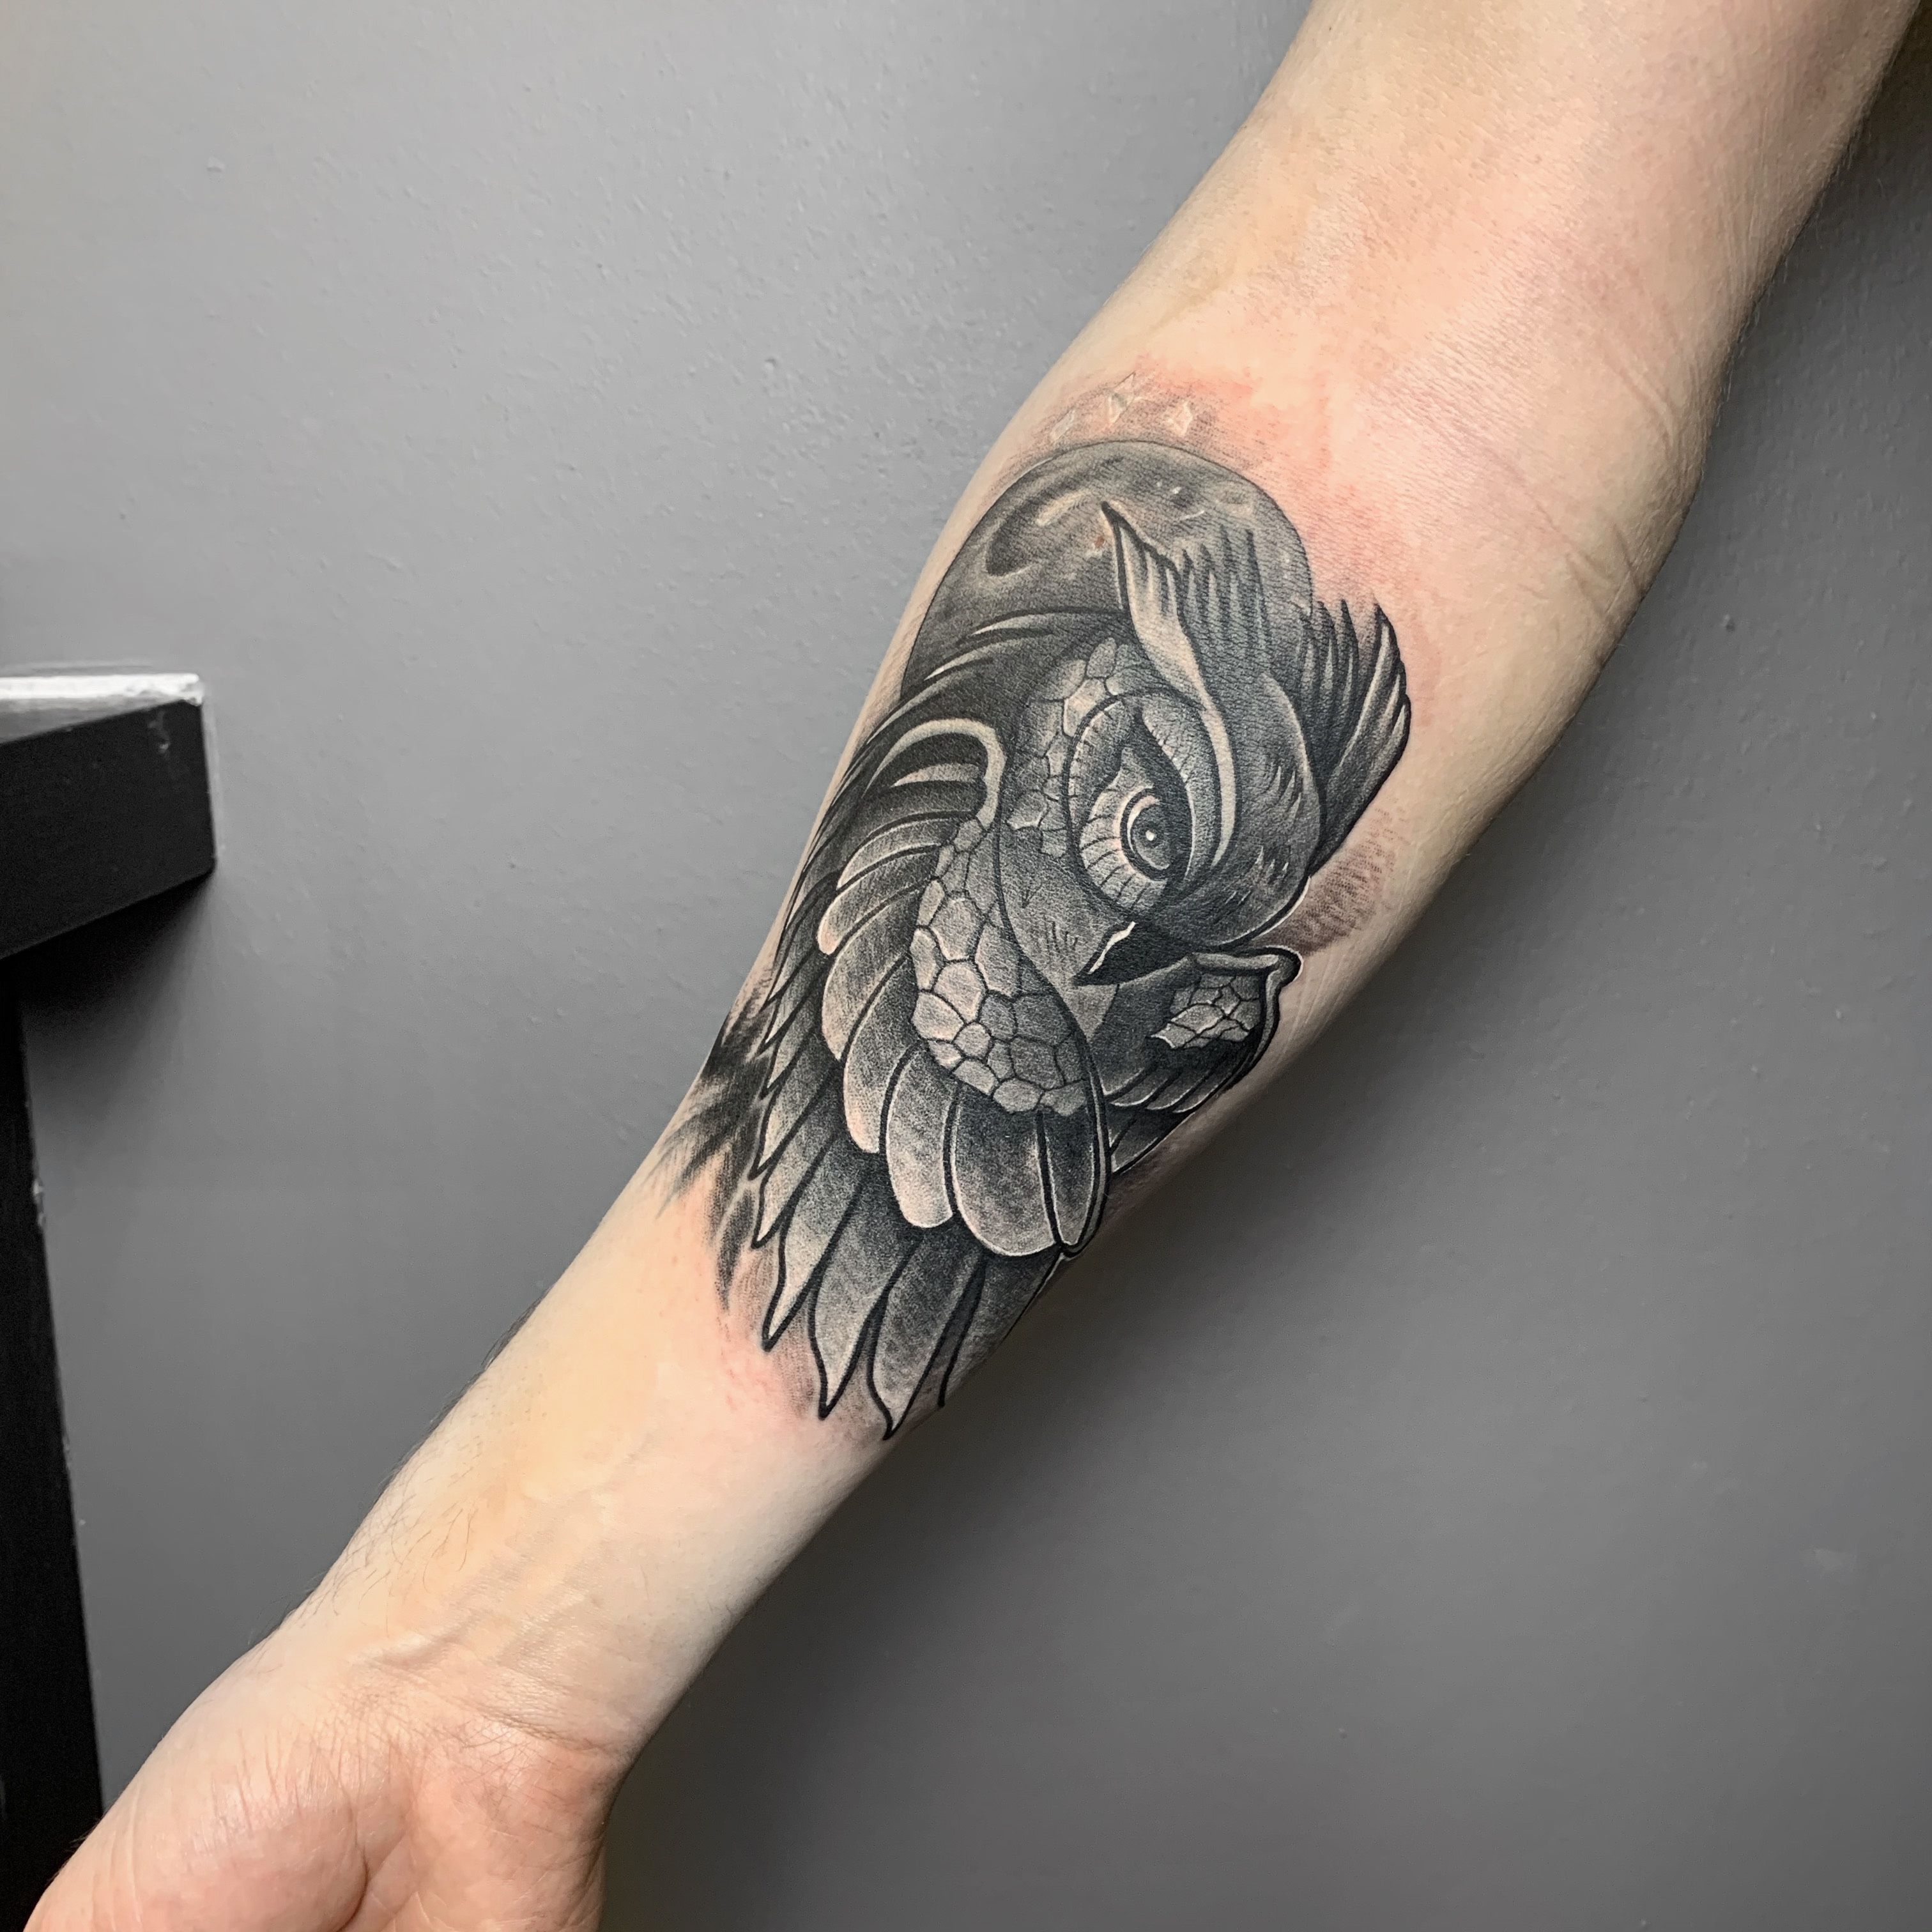 Bird wrist cover up by Haylo TattooNOW